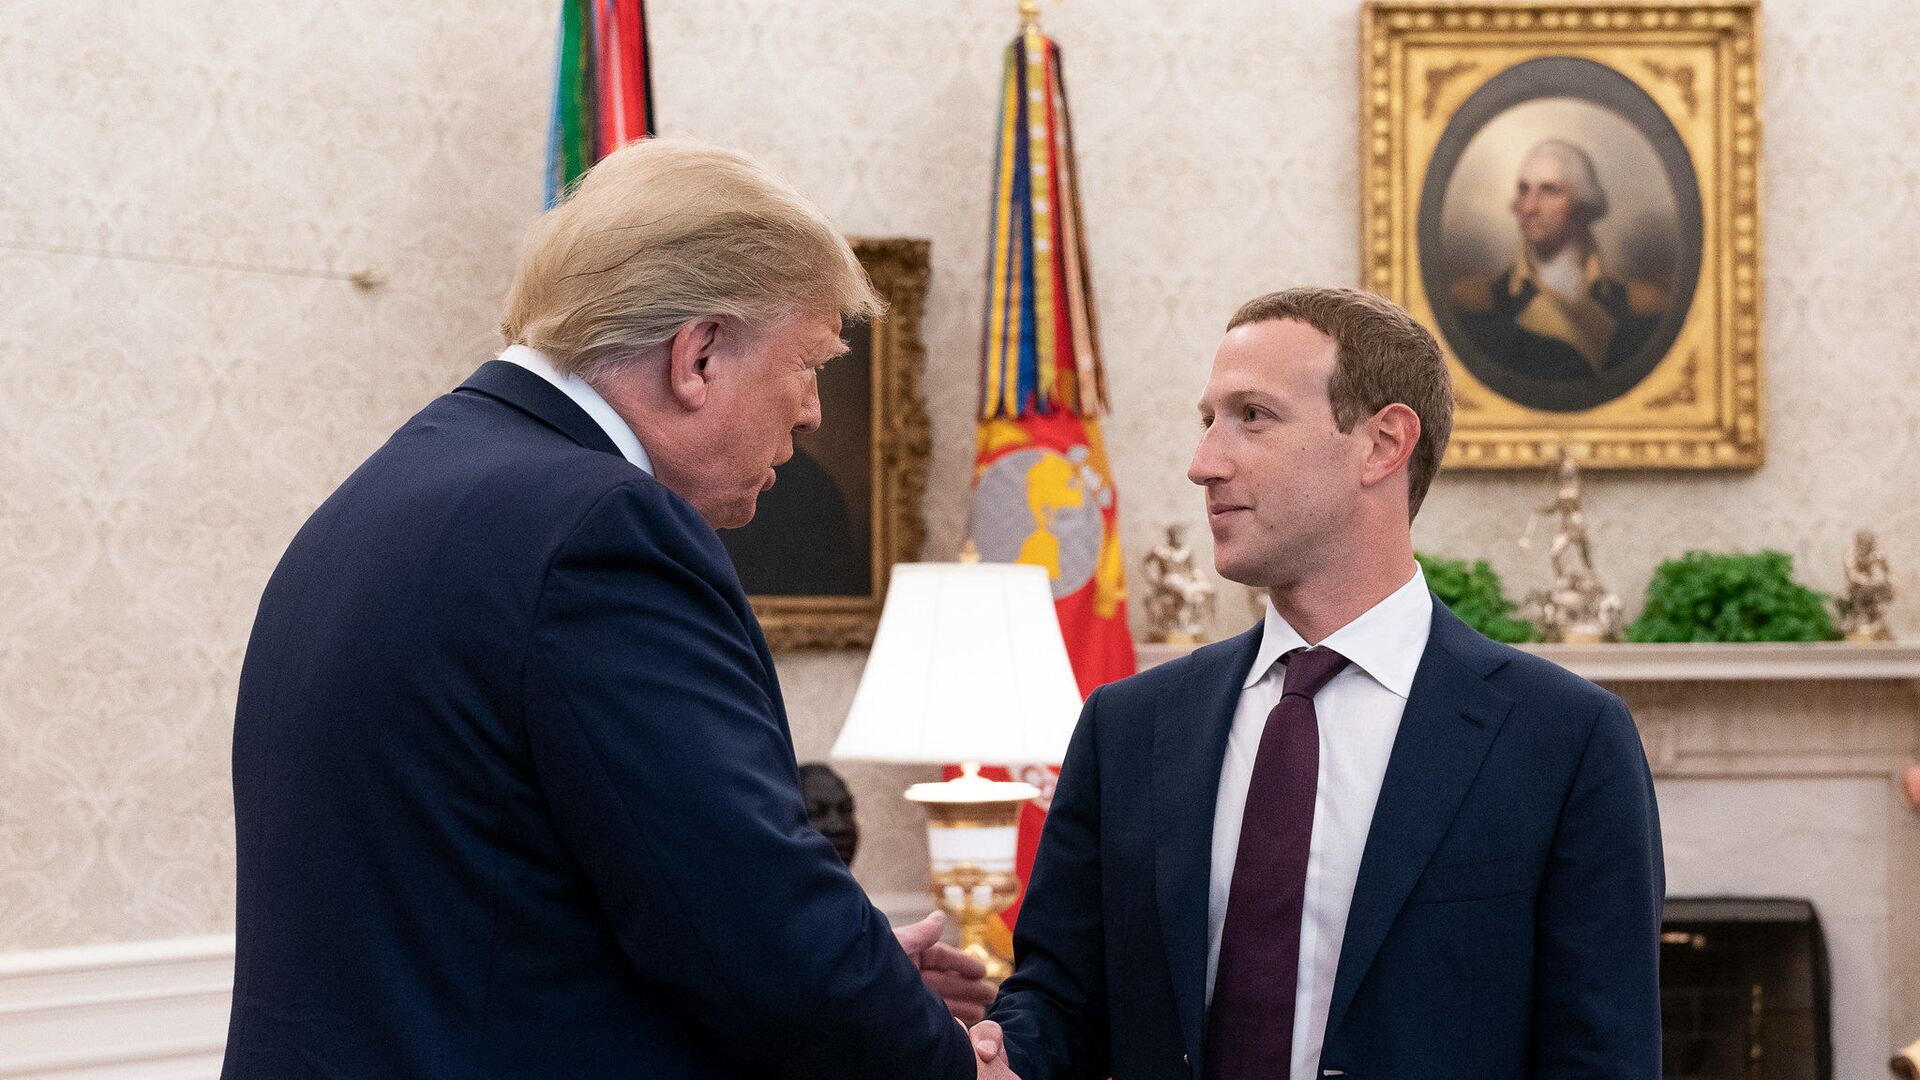 President Trump Meets with Mark Zuckerberg - Sputnik International, 1920, 28.10.2021